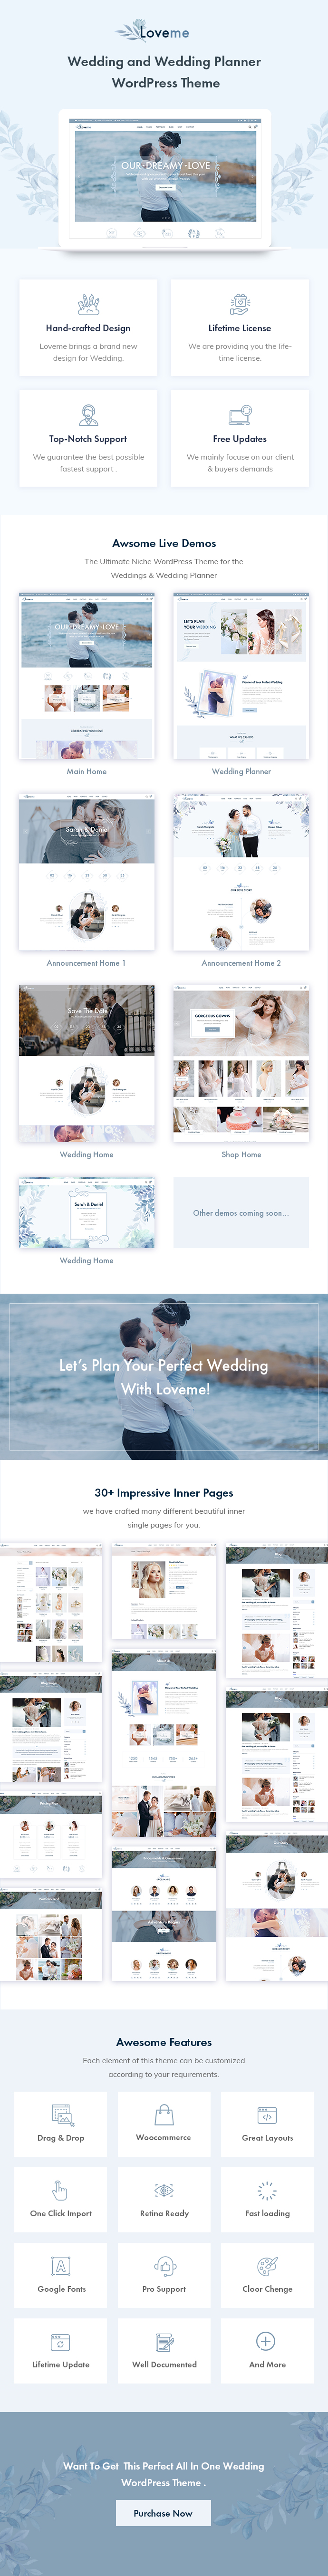 Loveme - Wedding & Wedding Planner WordPress Theme - 1